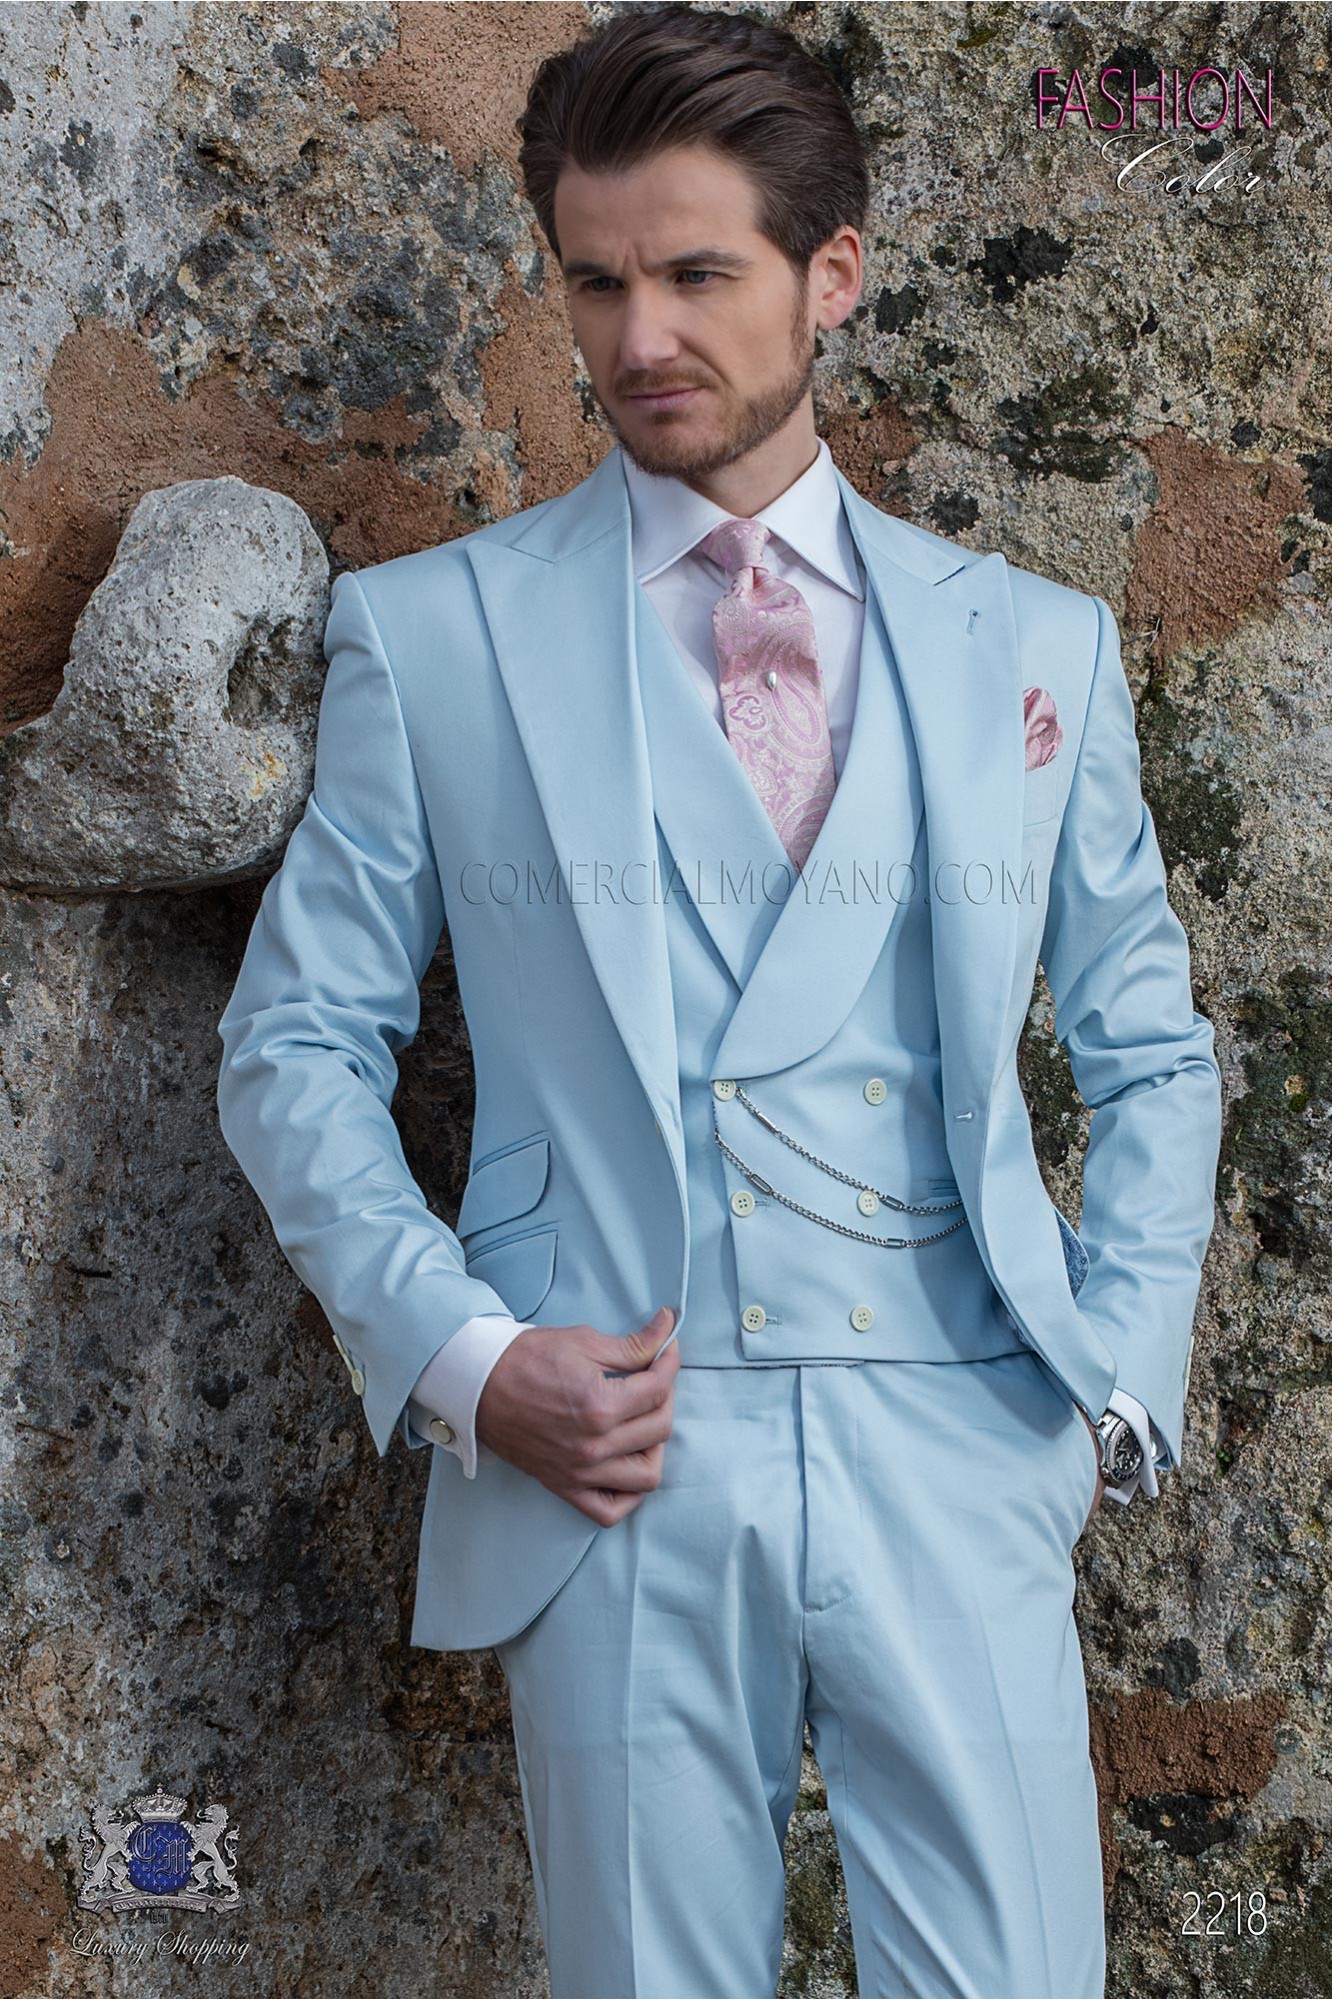 Traje moderno italiano de estilo “Slim”. Tejido azul celeste 100% algodón modelo: 2218 Mario Moyano colección Hipster